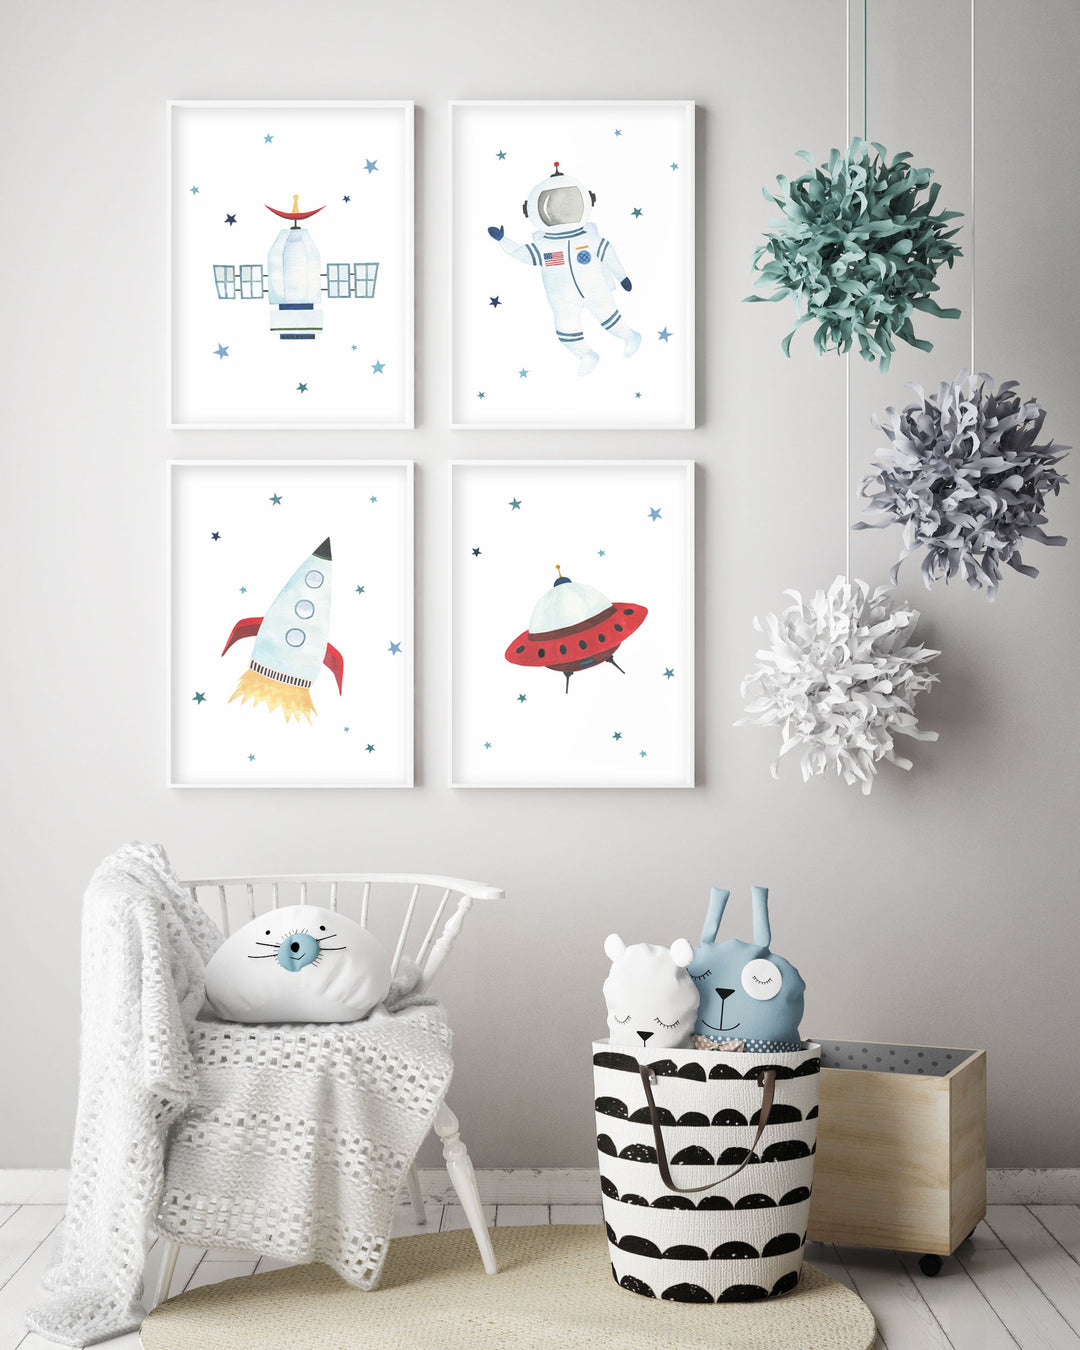 Astronaut Print - Outer Space Nursery - The Small Art Project - Modern Nursery Prints